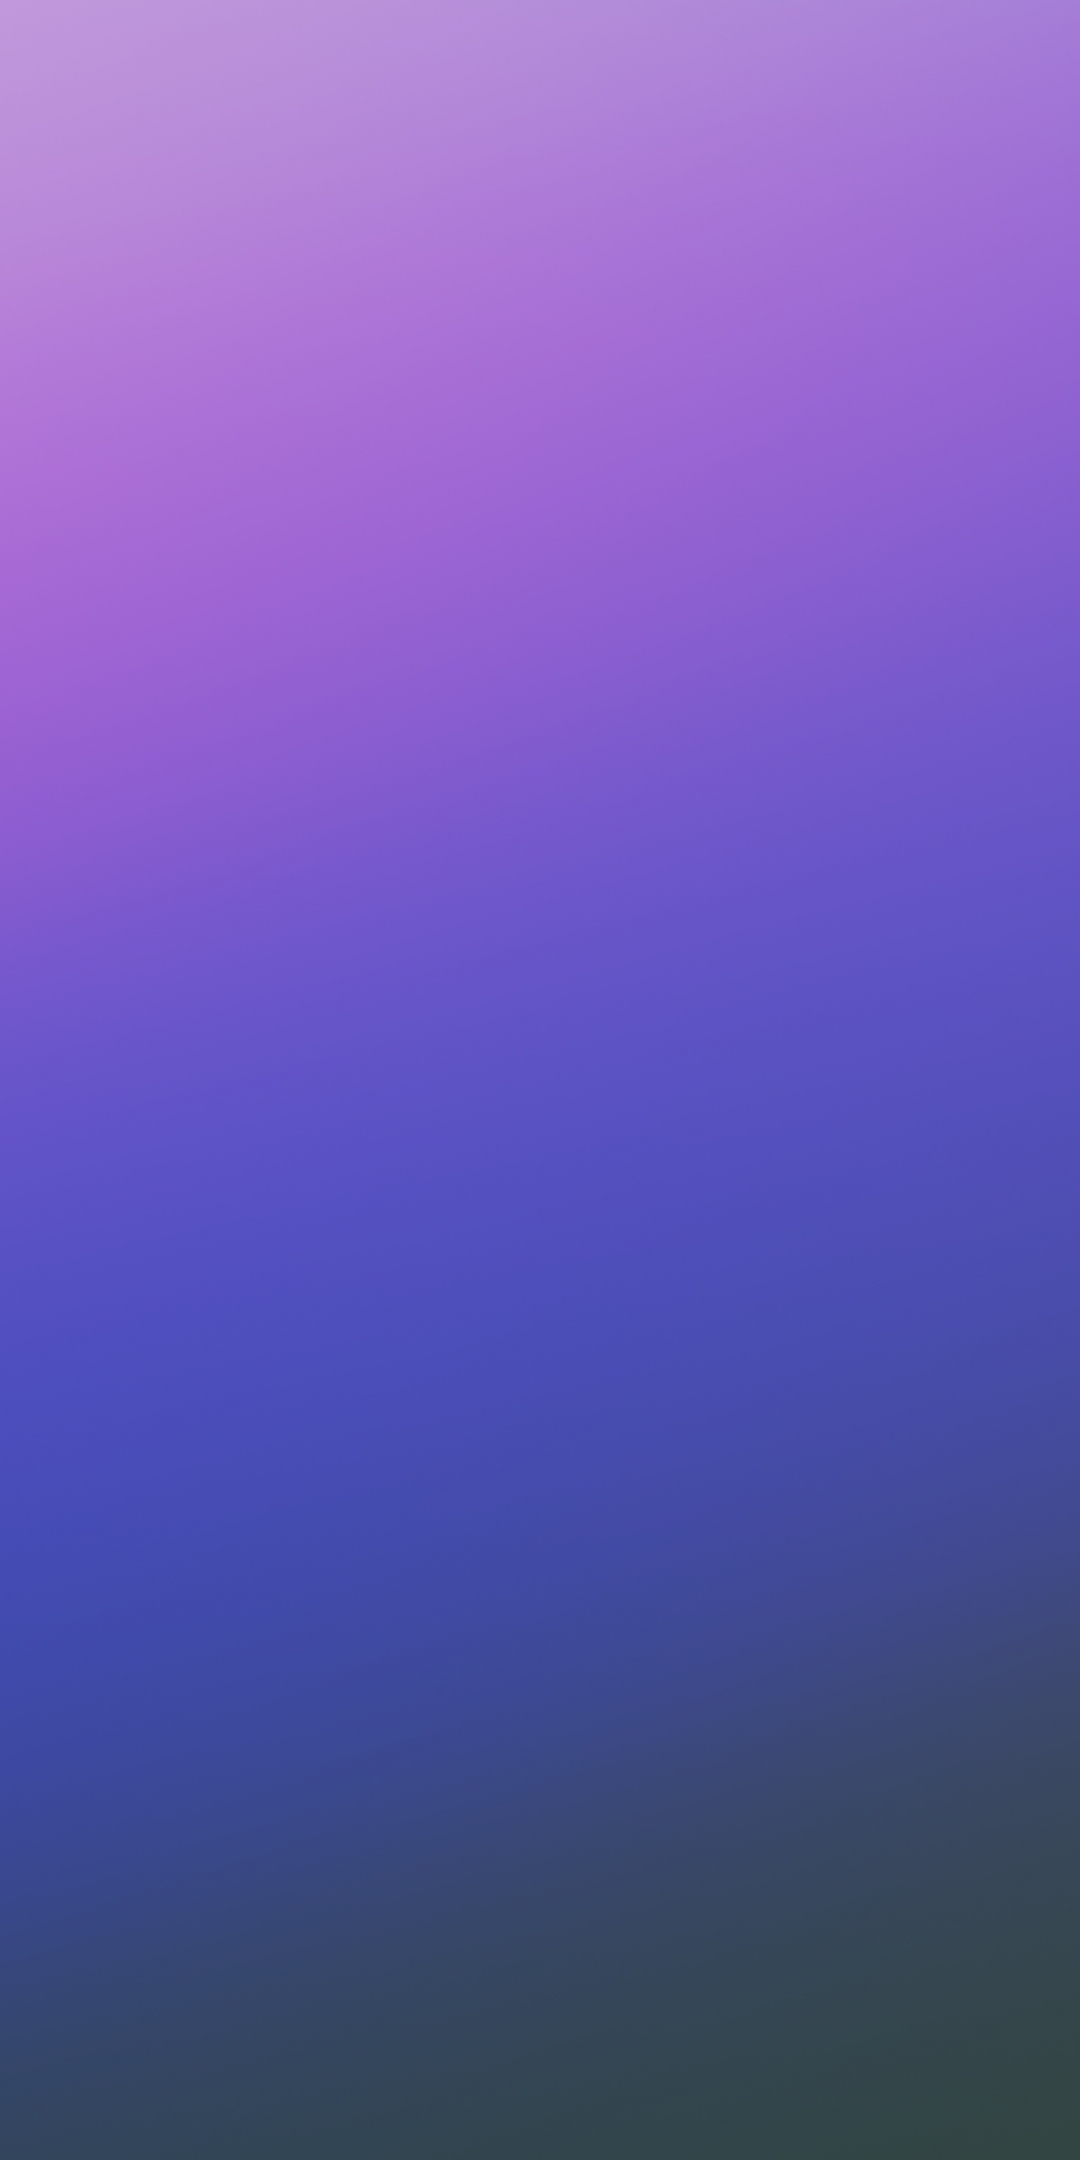 Blur, gradient, purple violet, digital art, 1080x2160 wallpaper